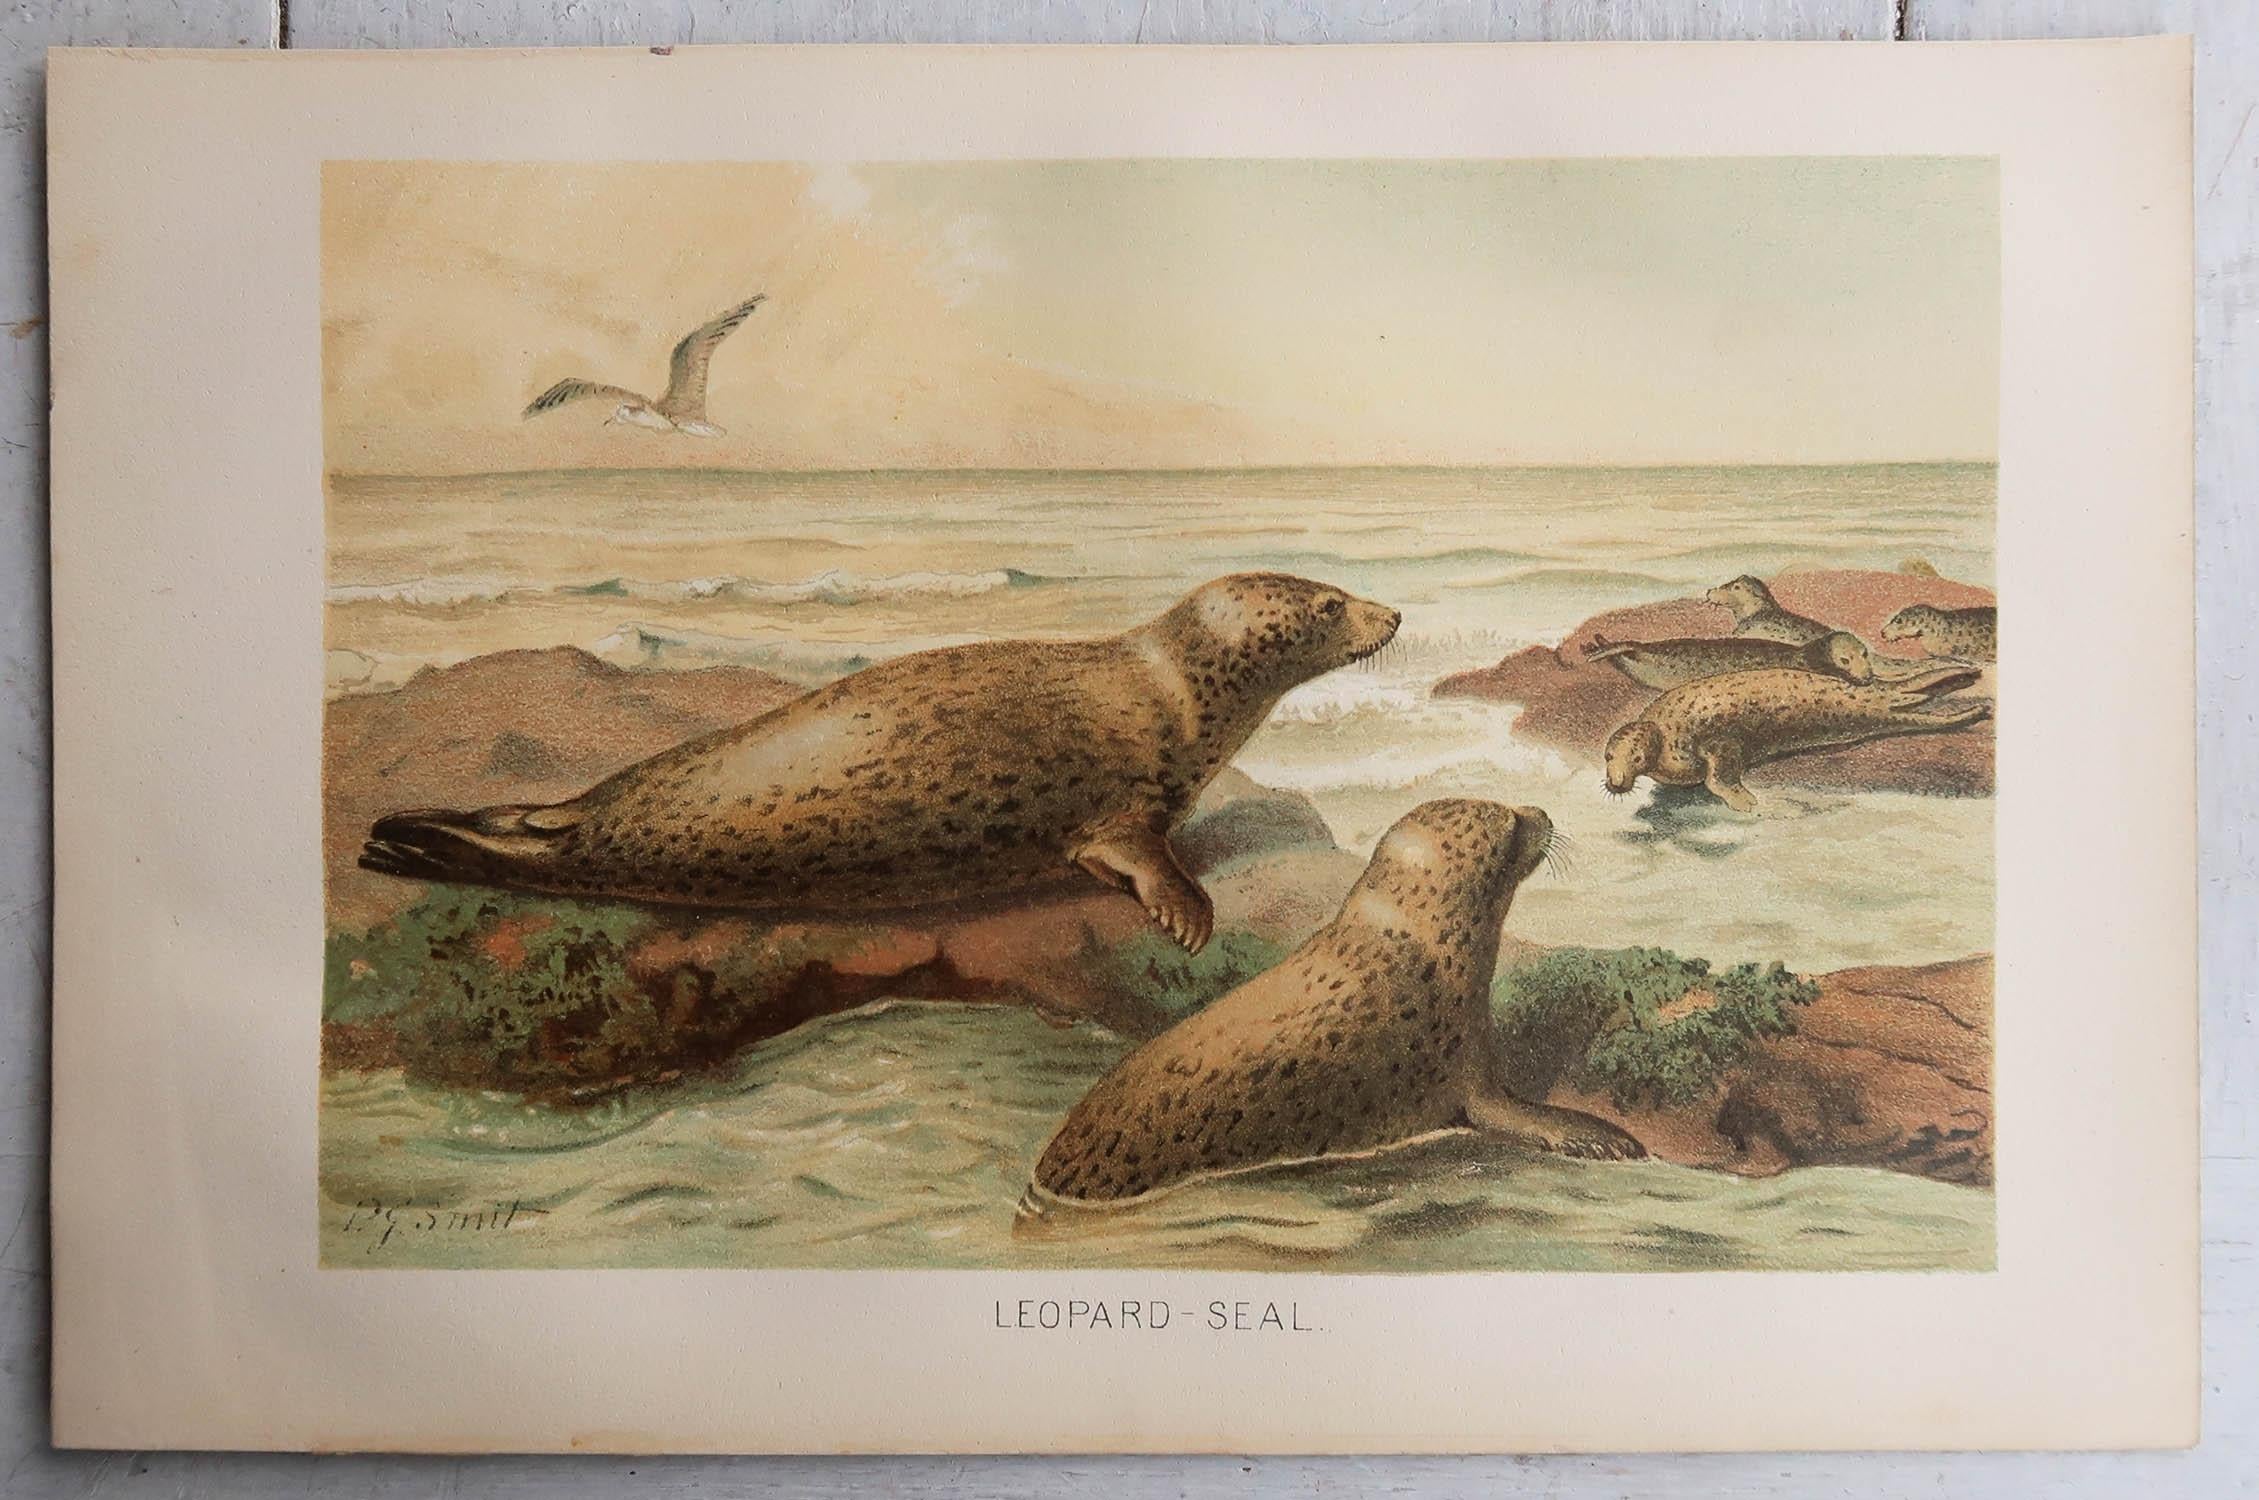 Folk Art Original Antique Print of Leopard Seals, C.1890 For Sale